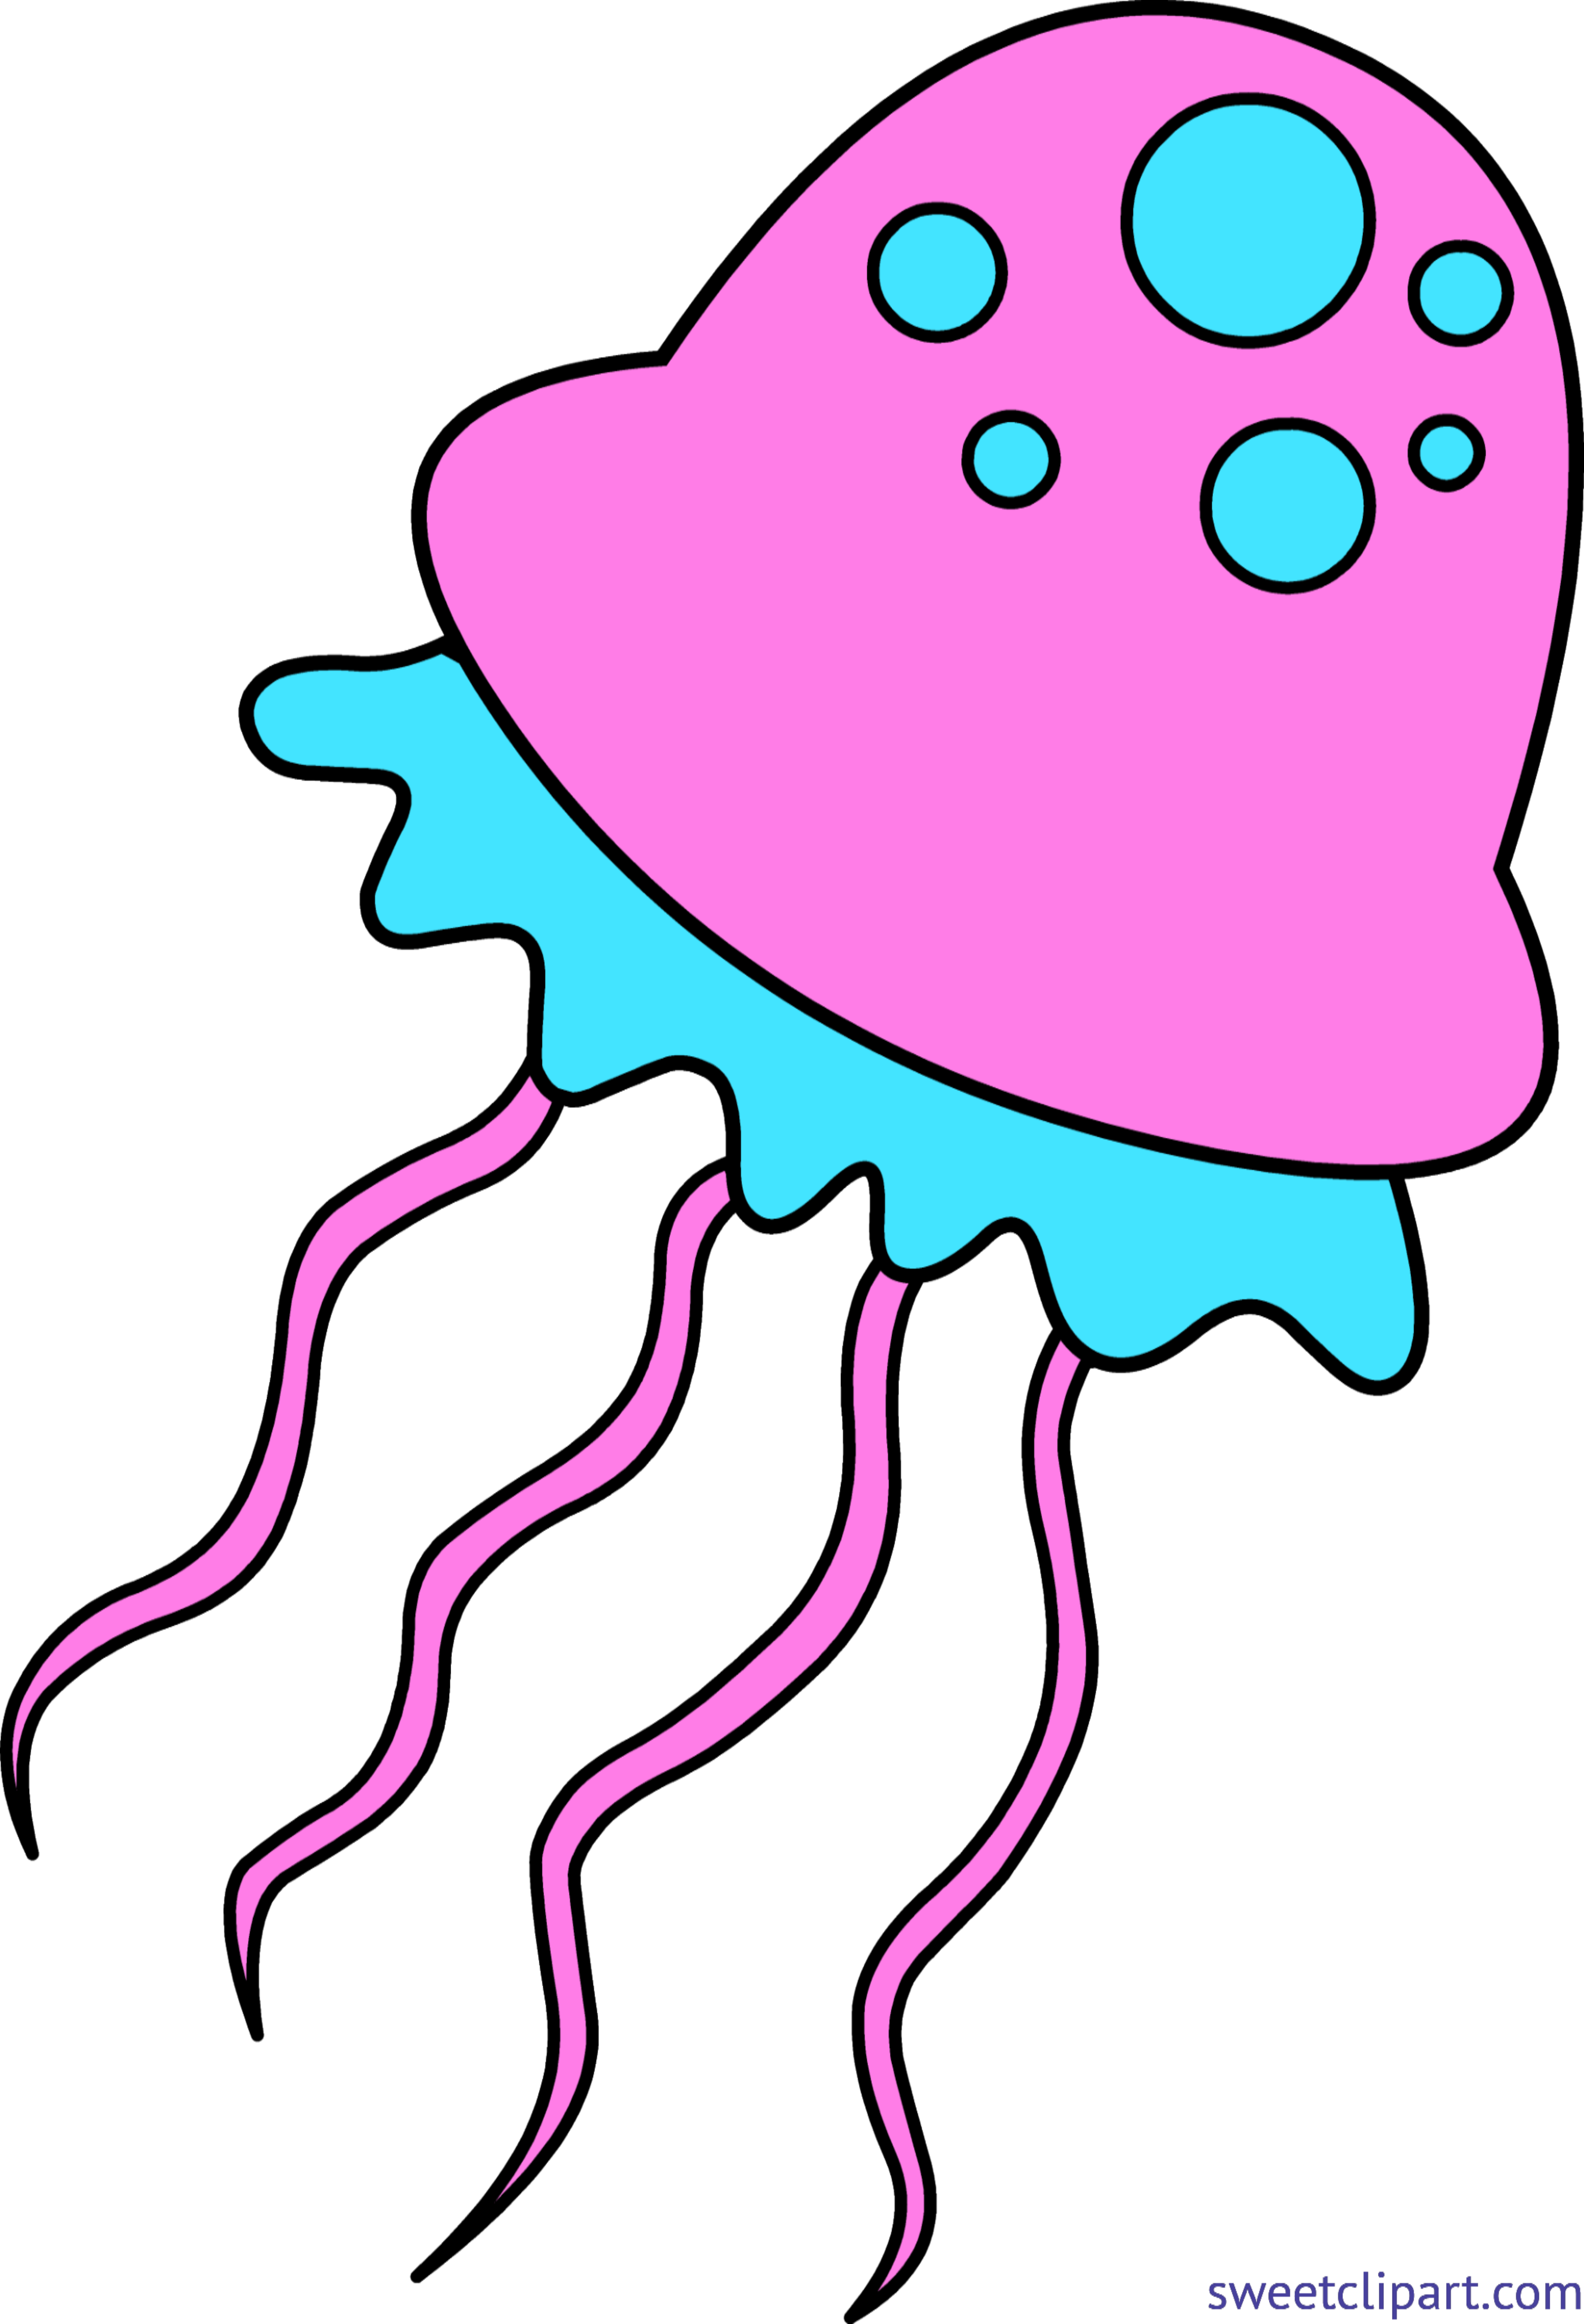 Jellyfish pink blue.